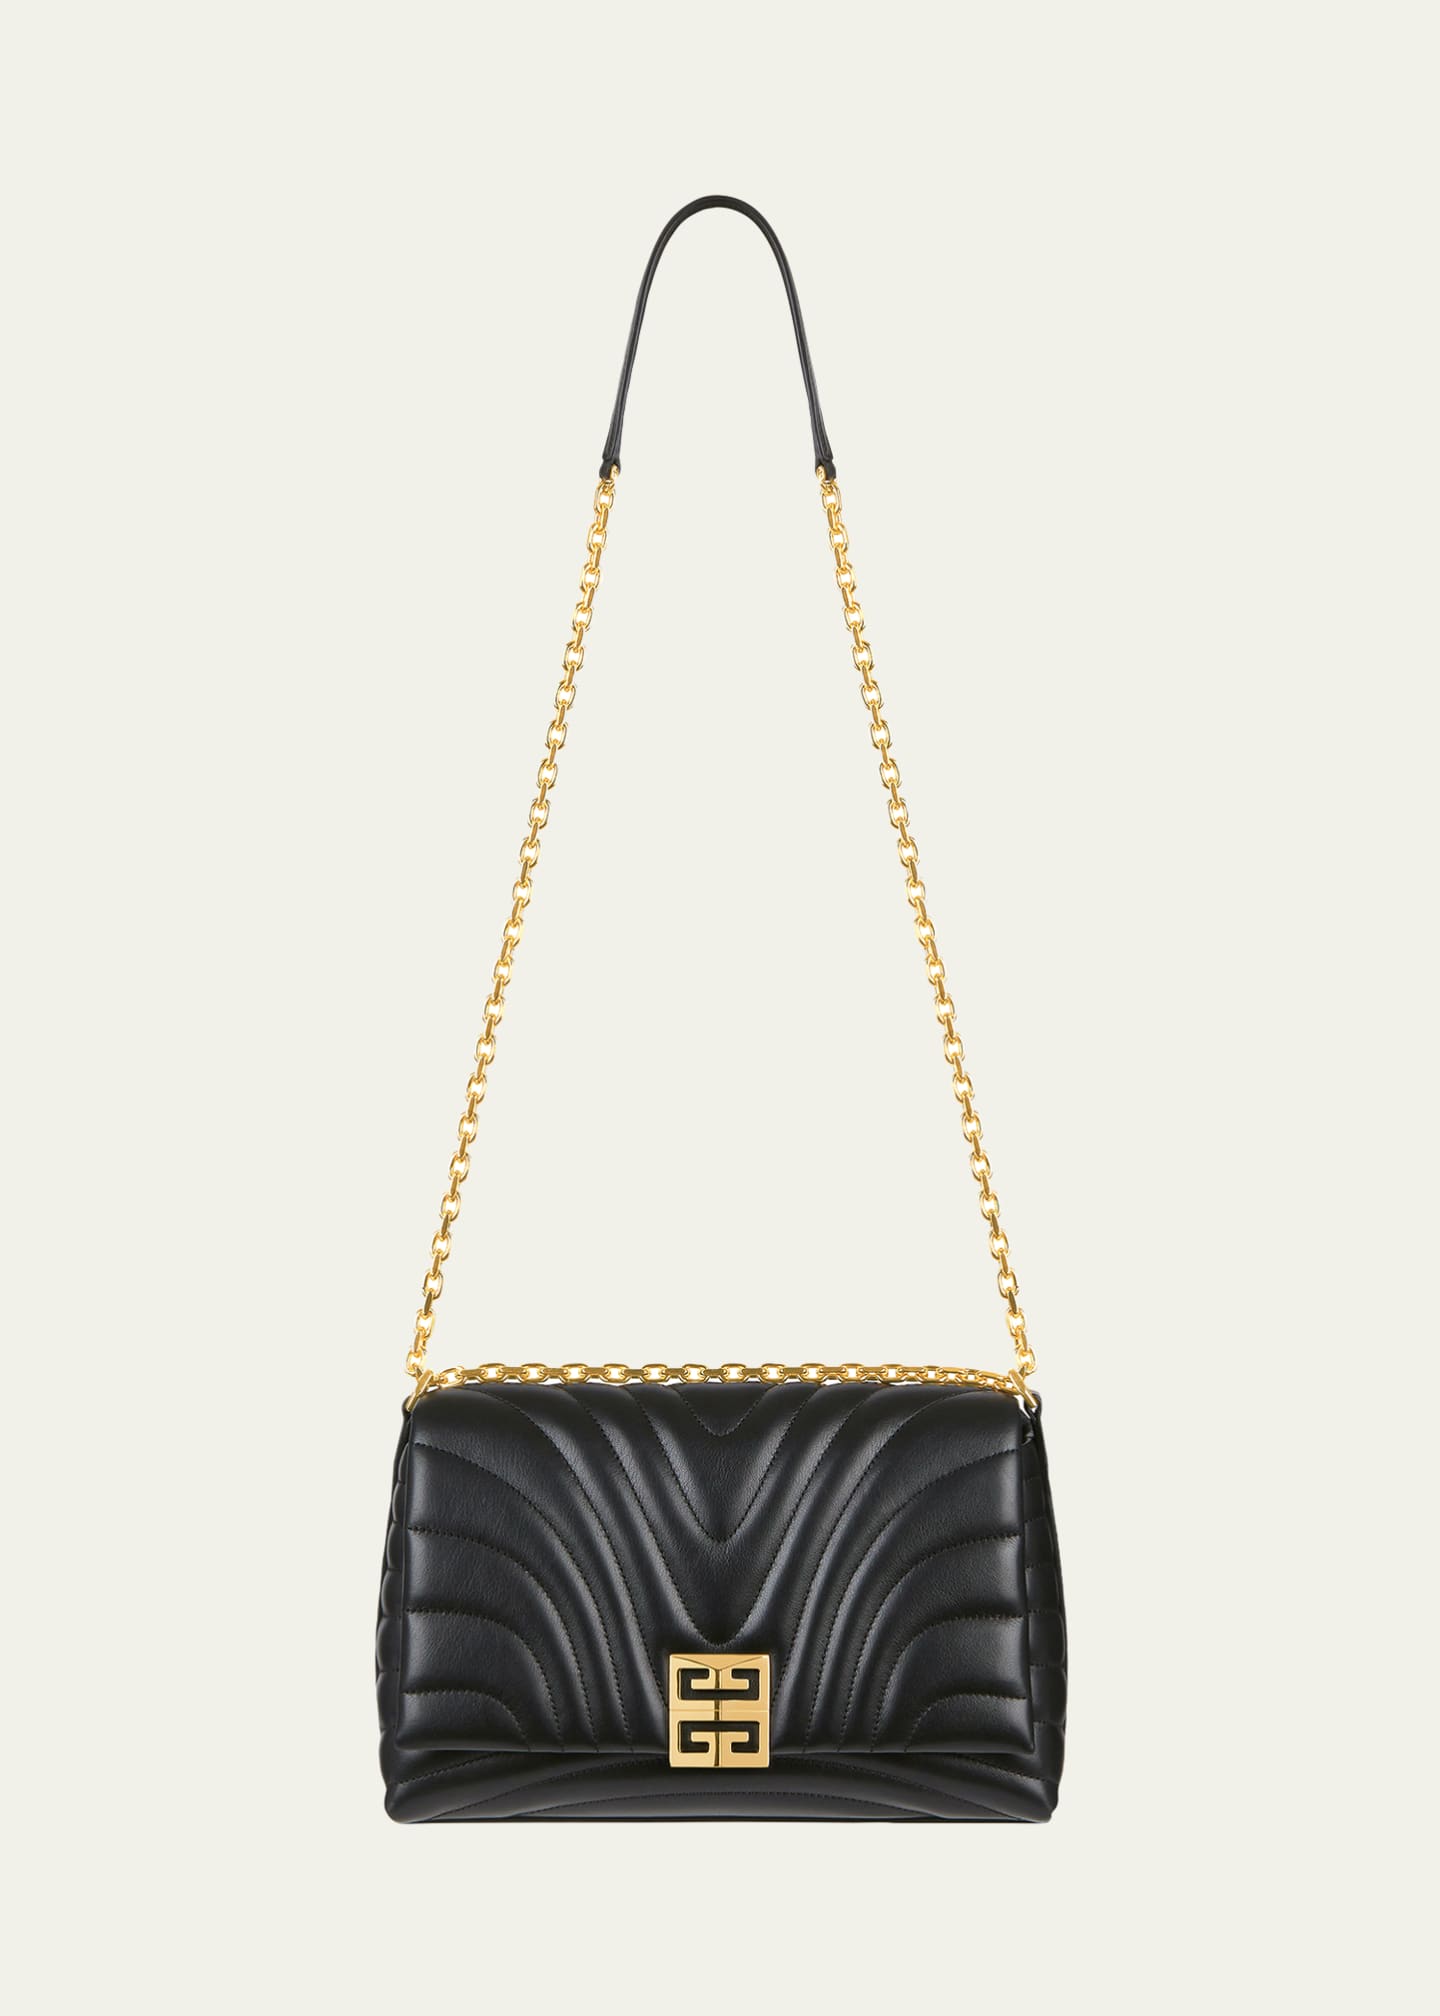 Givenchy 4G Medium Quilted Leather Shoulder Bag - Bergdorf Goodman